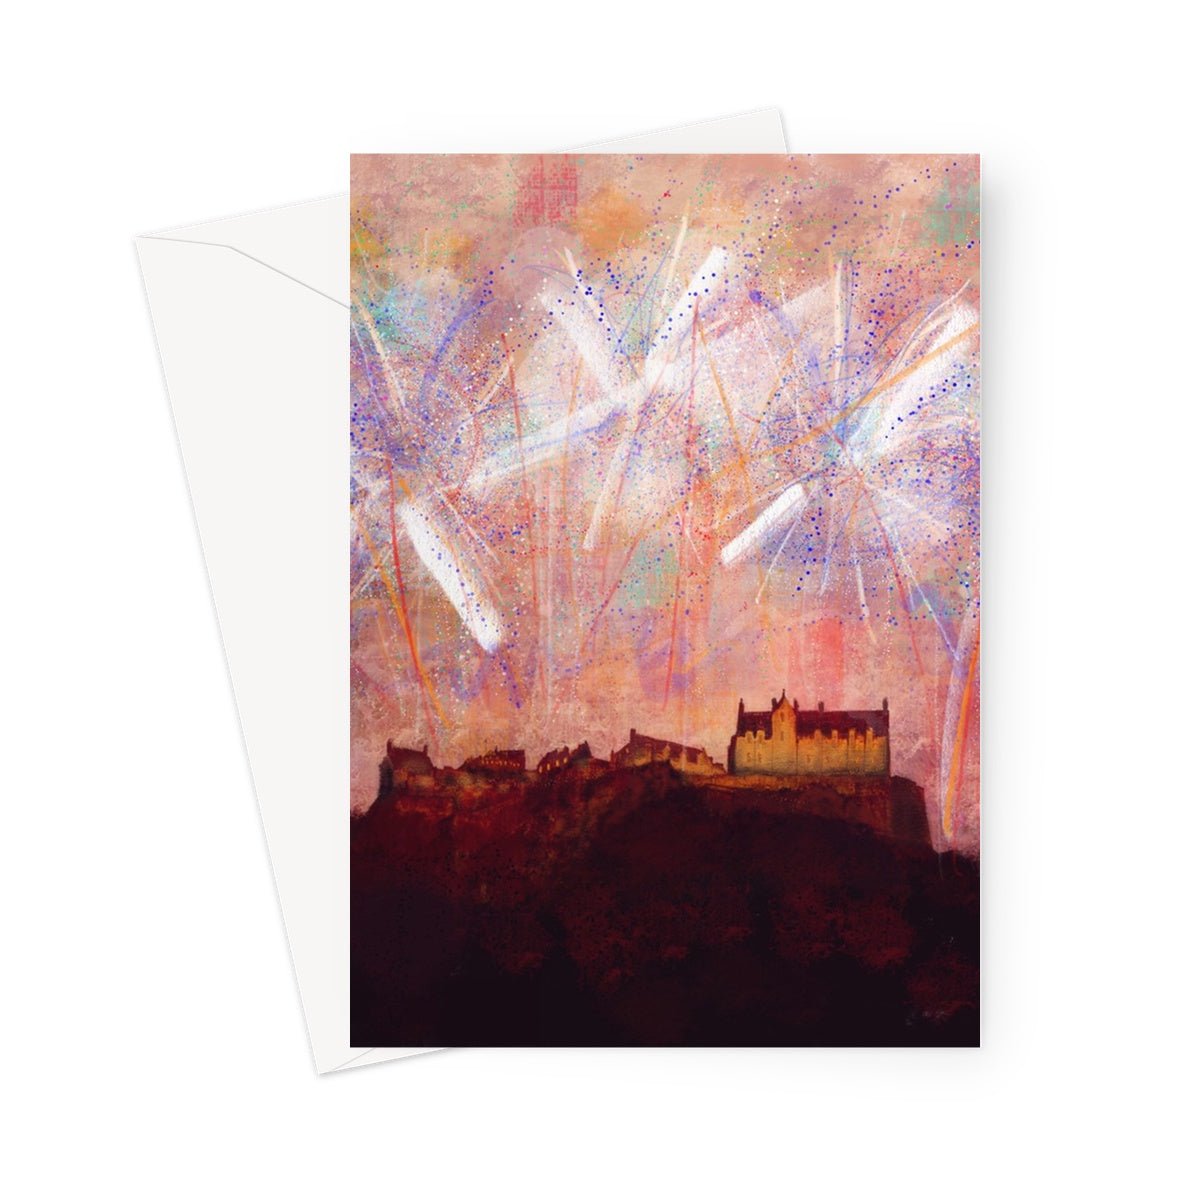 Edinburgh Castle Fireworks Art Gifts Greeting Card-Greetings Cards-Edinburgh & Glasgow Art Gallery-5"x7"-1 Card-Paintings, Prints, Homeware, Art Gifts From Scotland By Scottish Artist Kevin Hunter